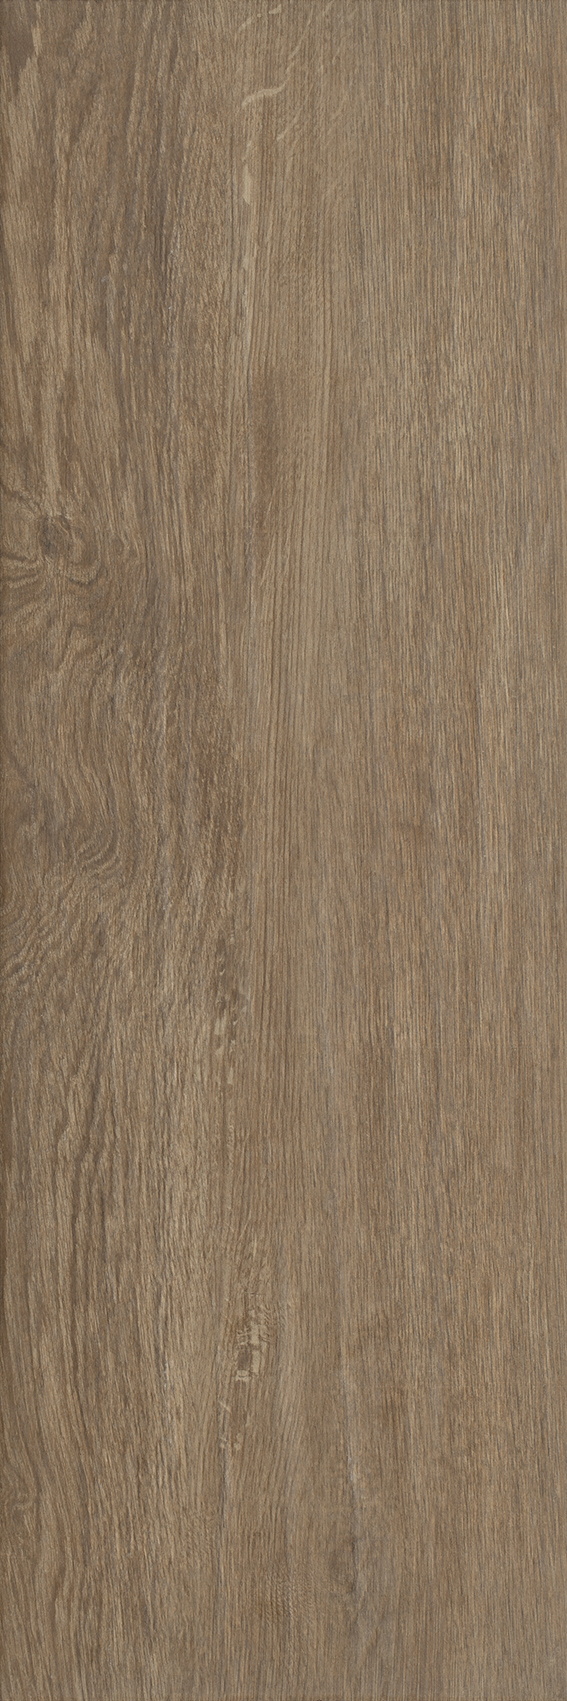 Dlažba Wood Basic Brown 20x60 cm